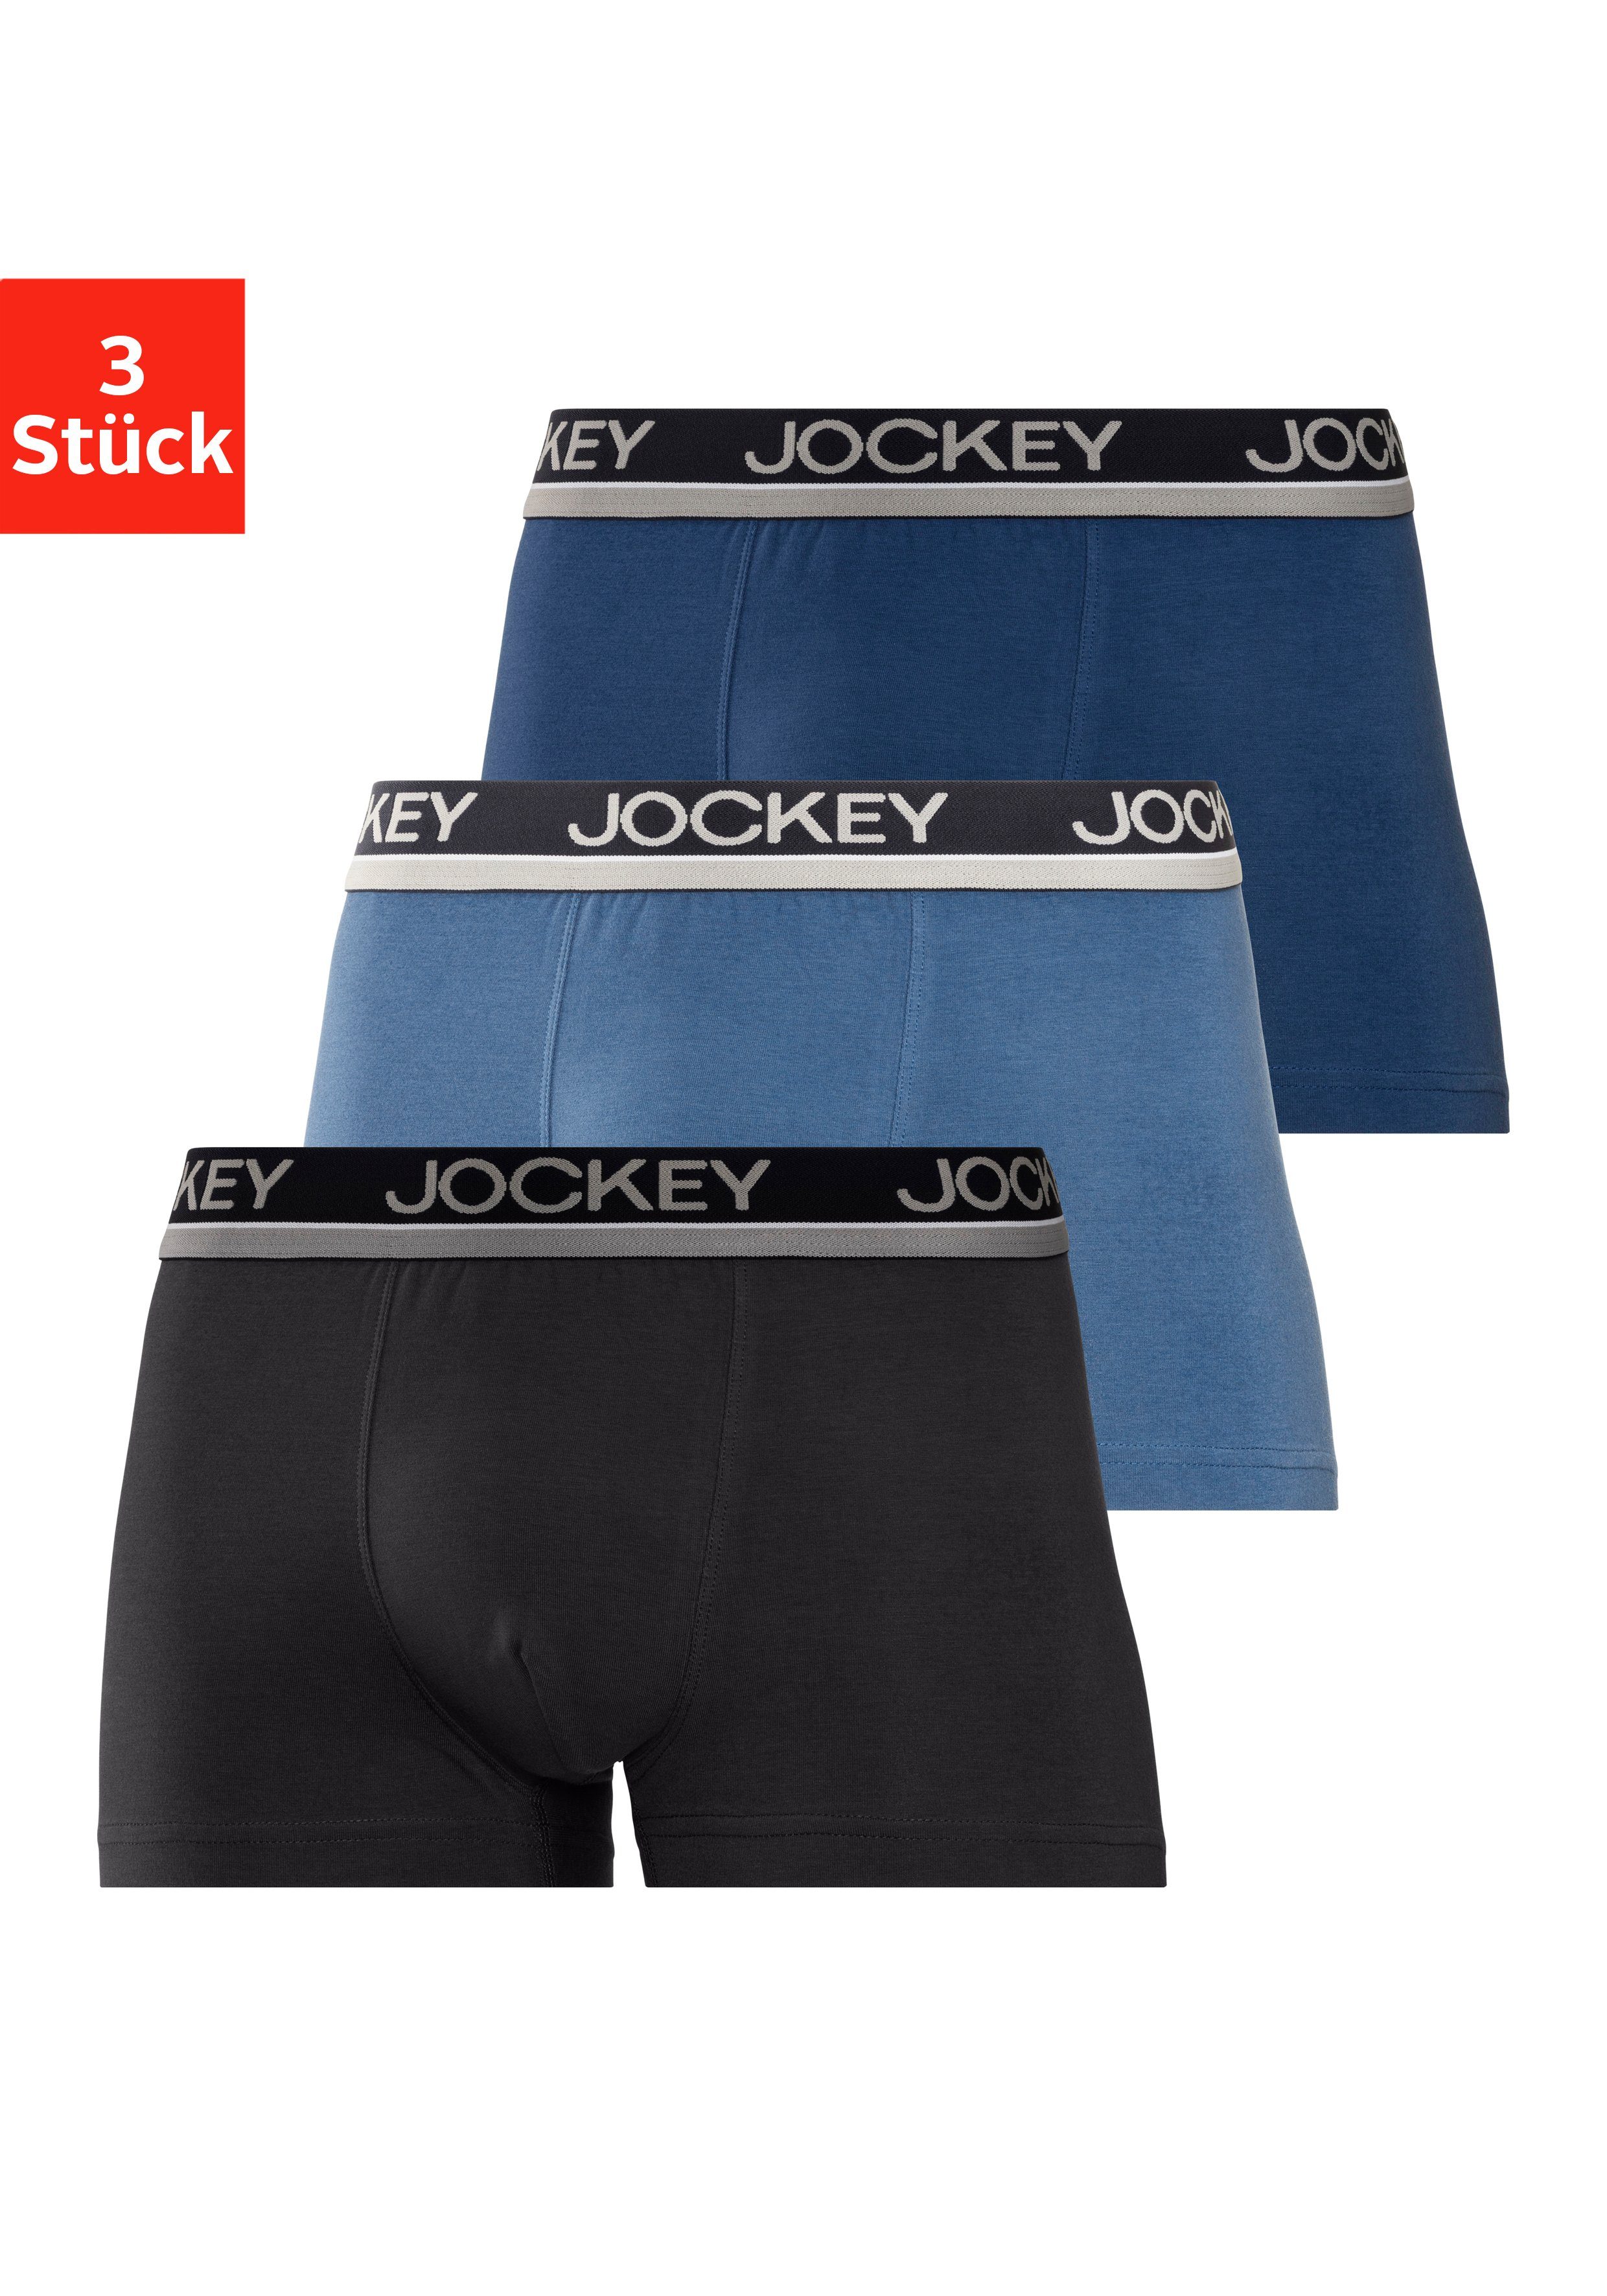 Jockey Boxer (Packung, 3-St) mit Logo Webbund blau, dunkelblau, anthrazit